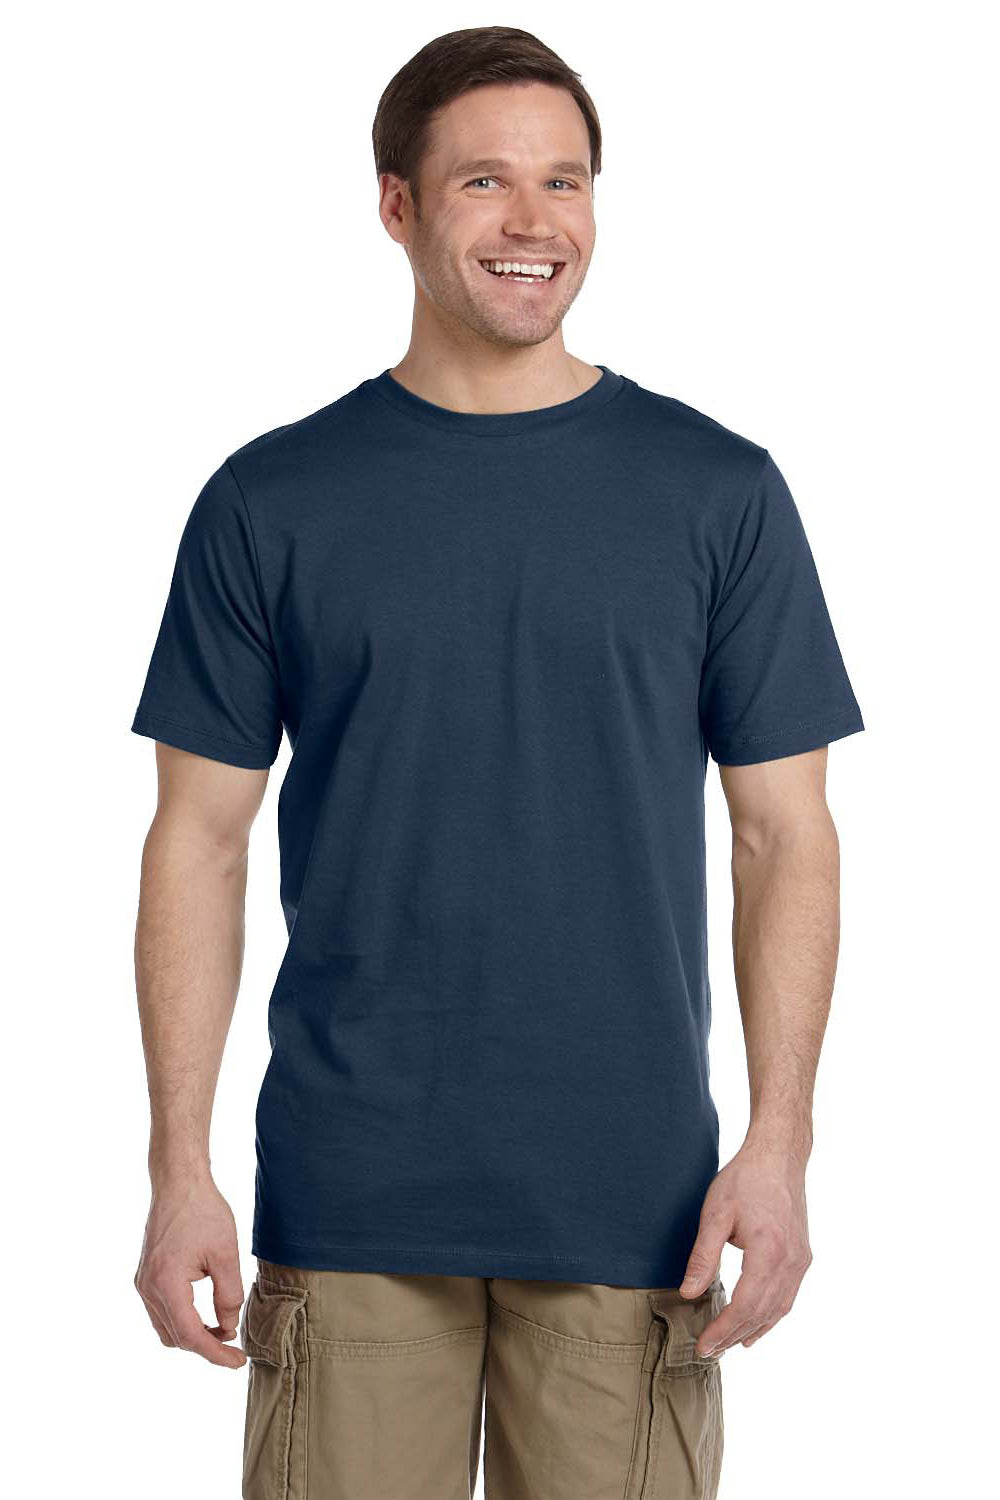 Econscious EC1075 Mens Short Sleeve Crewneck T-Shirt Navy Blue Front